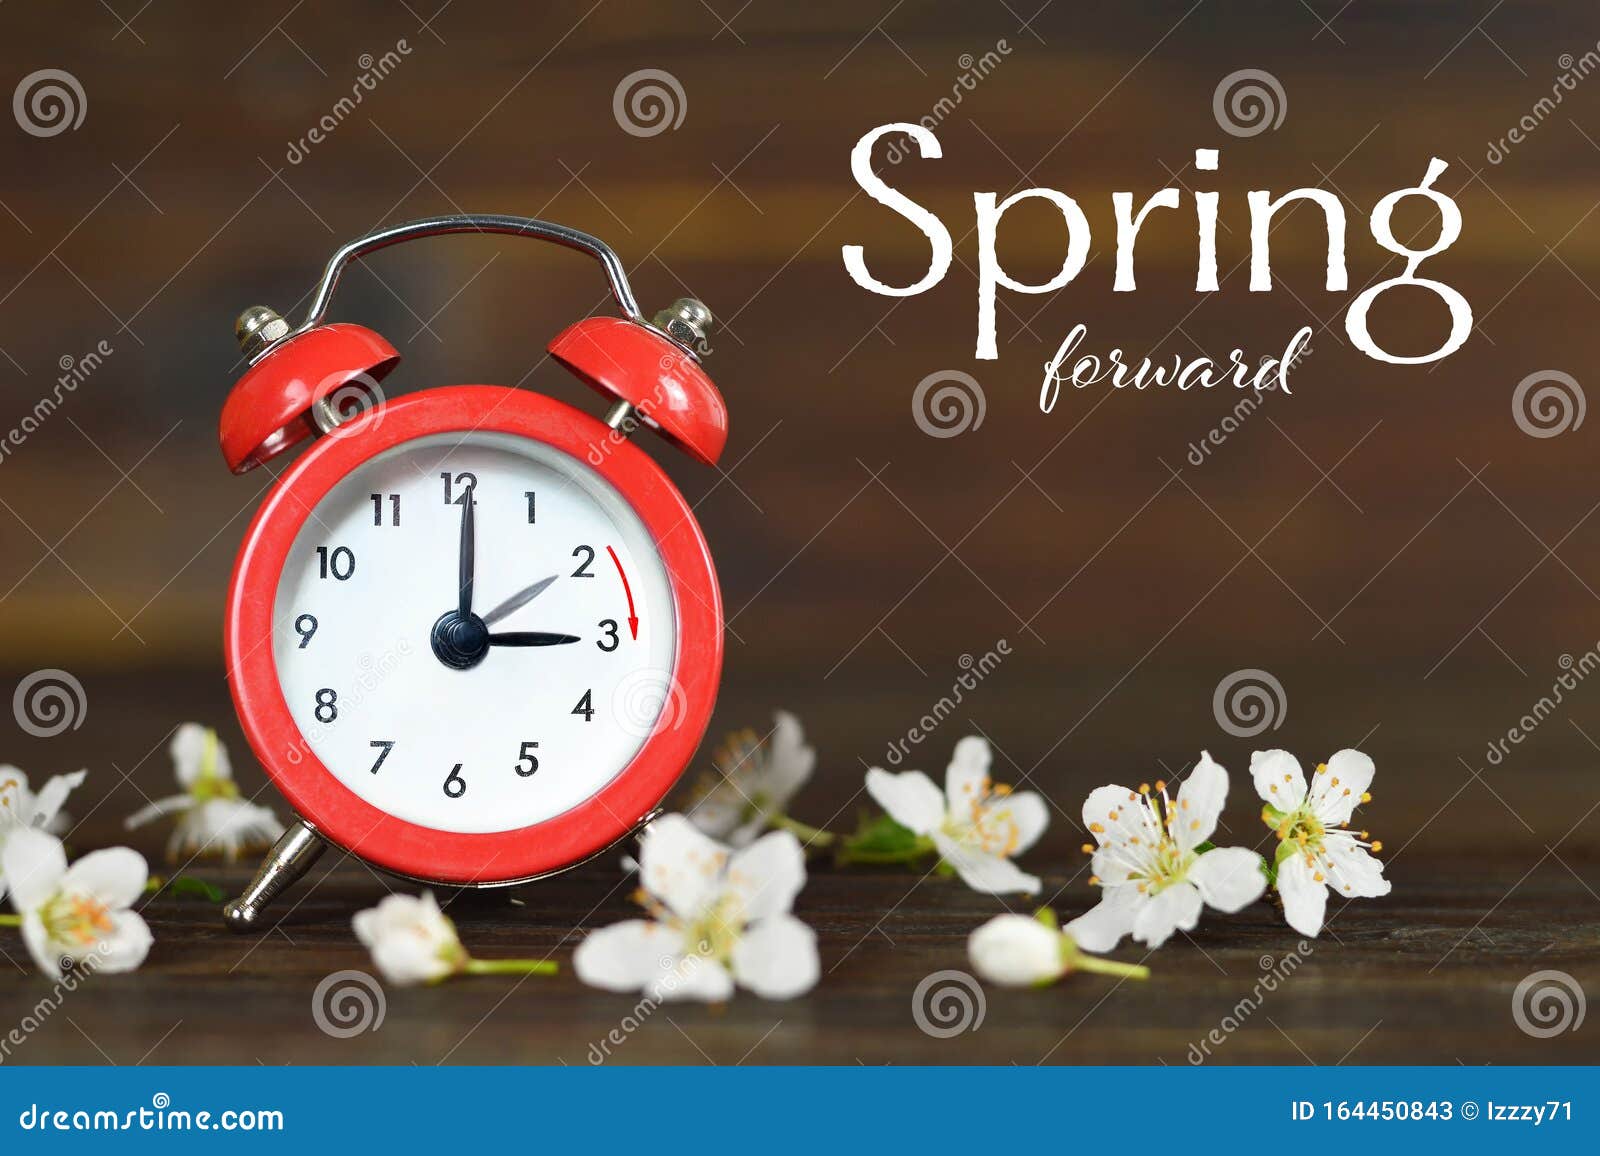 spring forward. daylight saving time